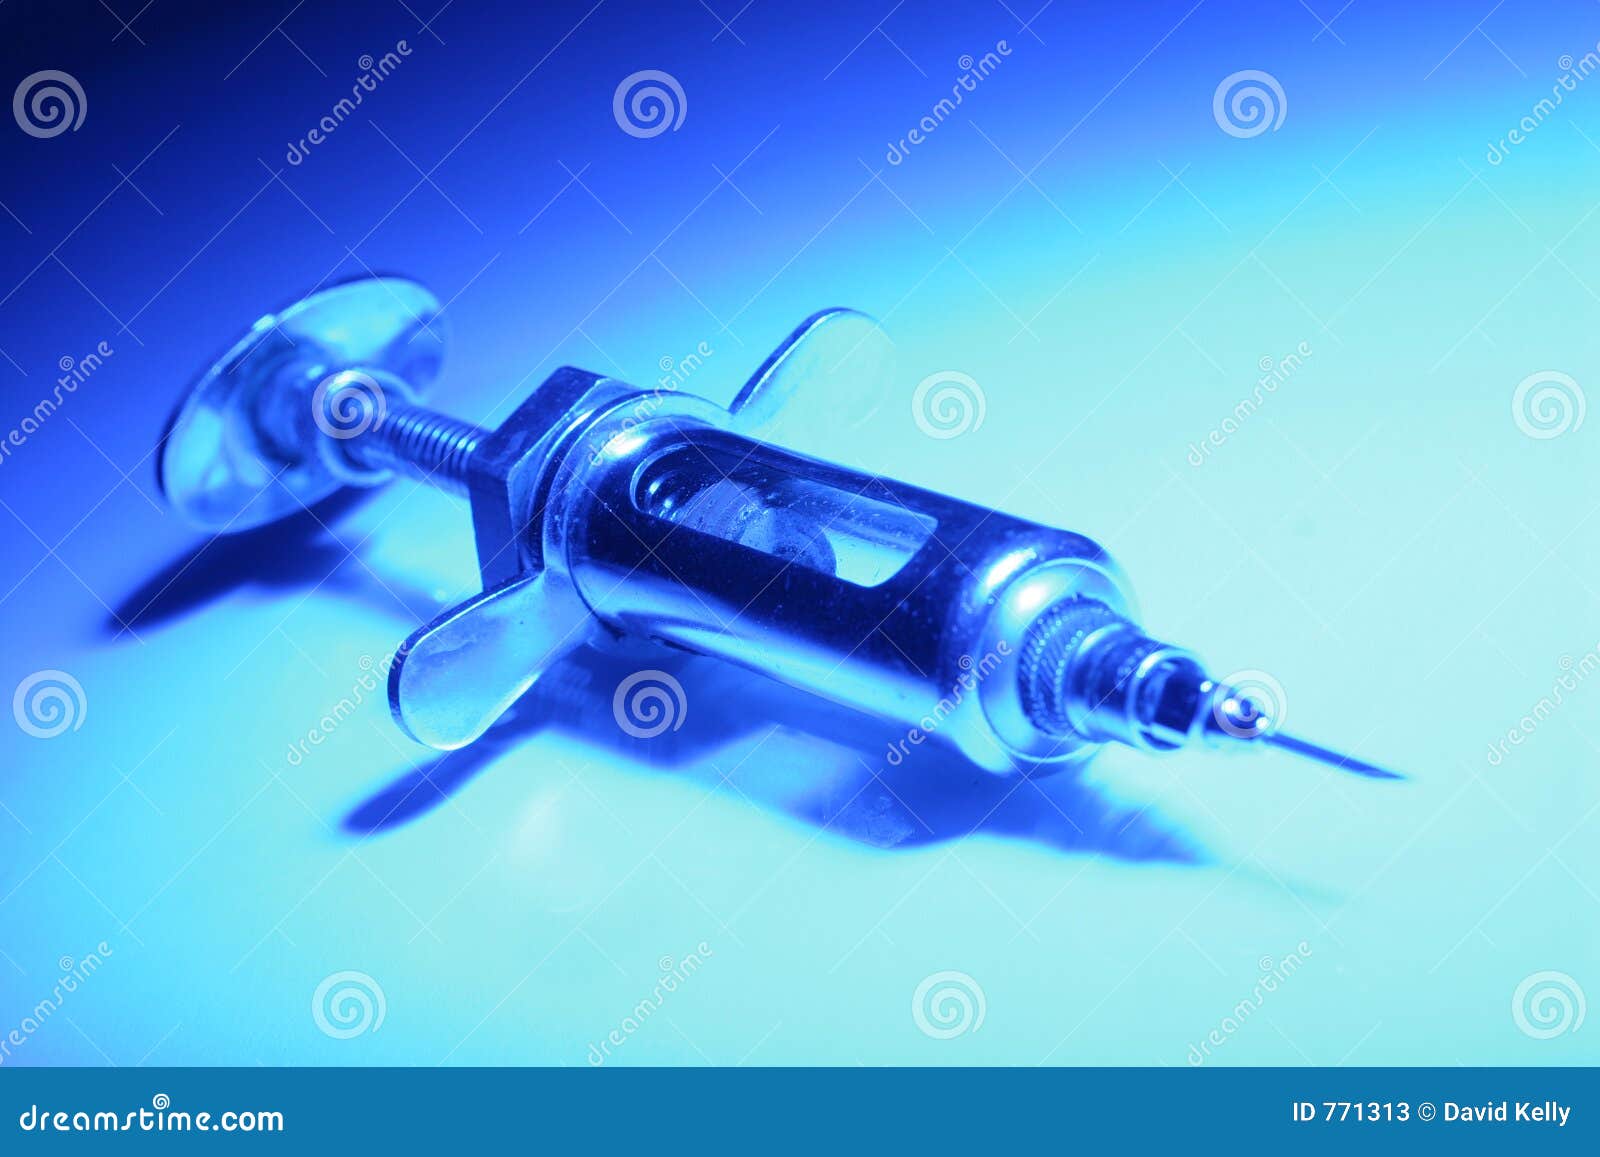 blue hypodermic needle